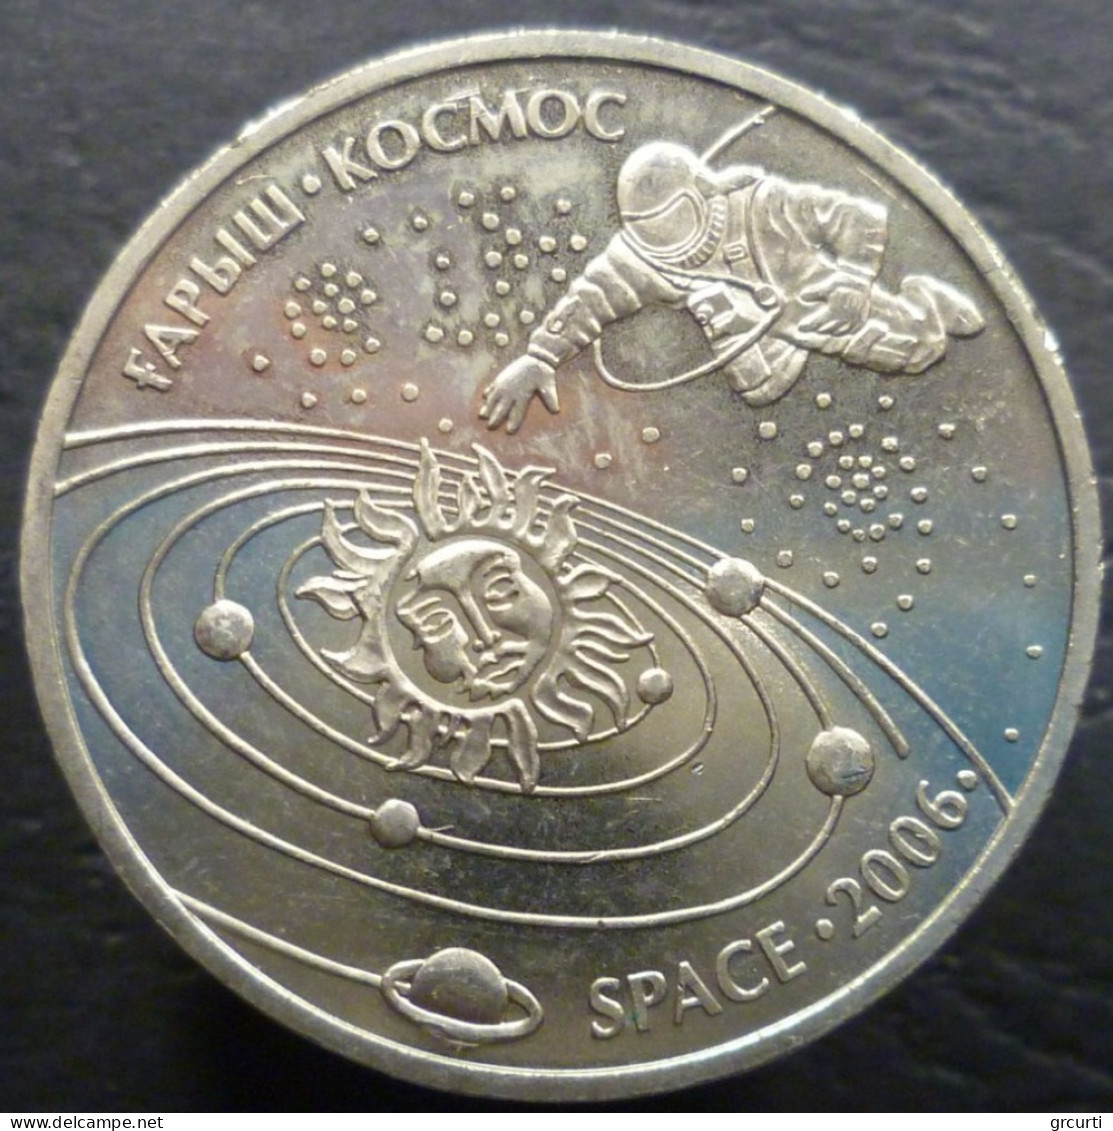 Kazakistan - 50 Tenge 2006 - Esplorazione Spaziale - KM# 73 - Kasachstan